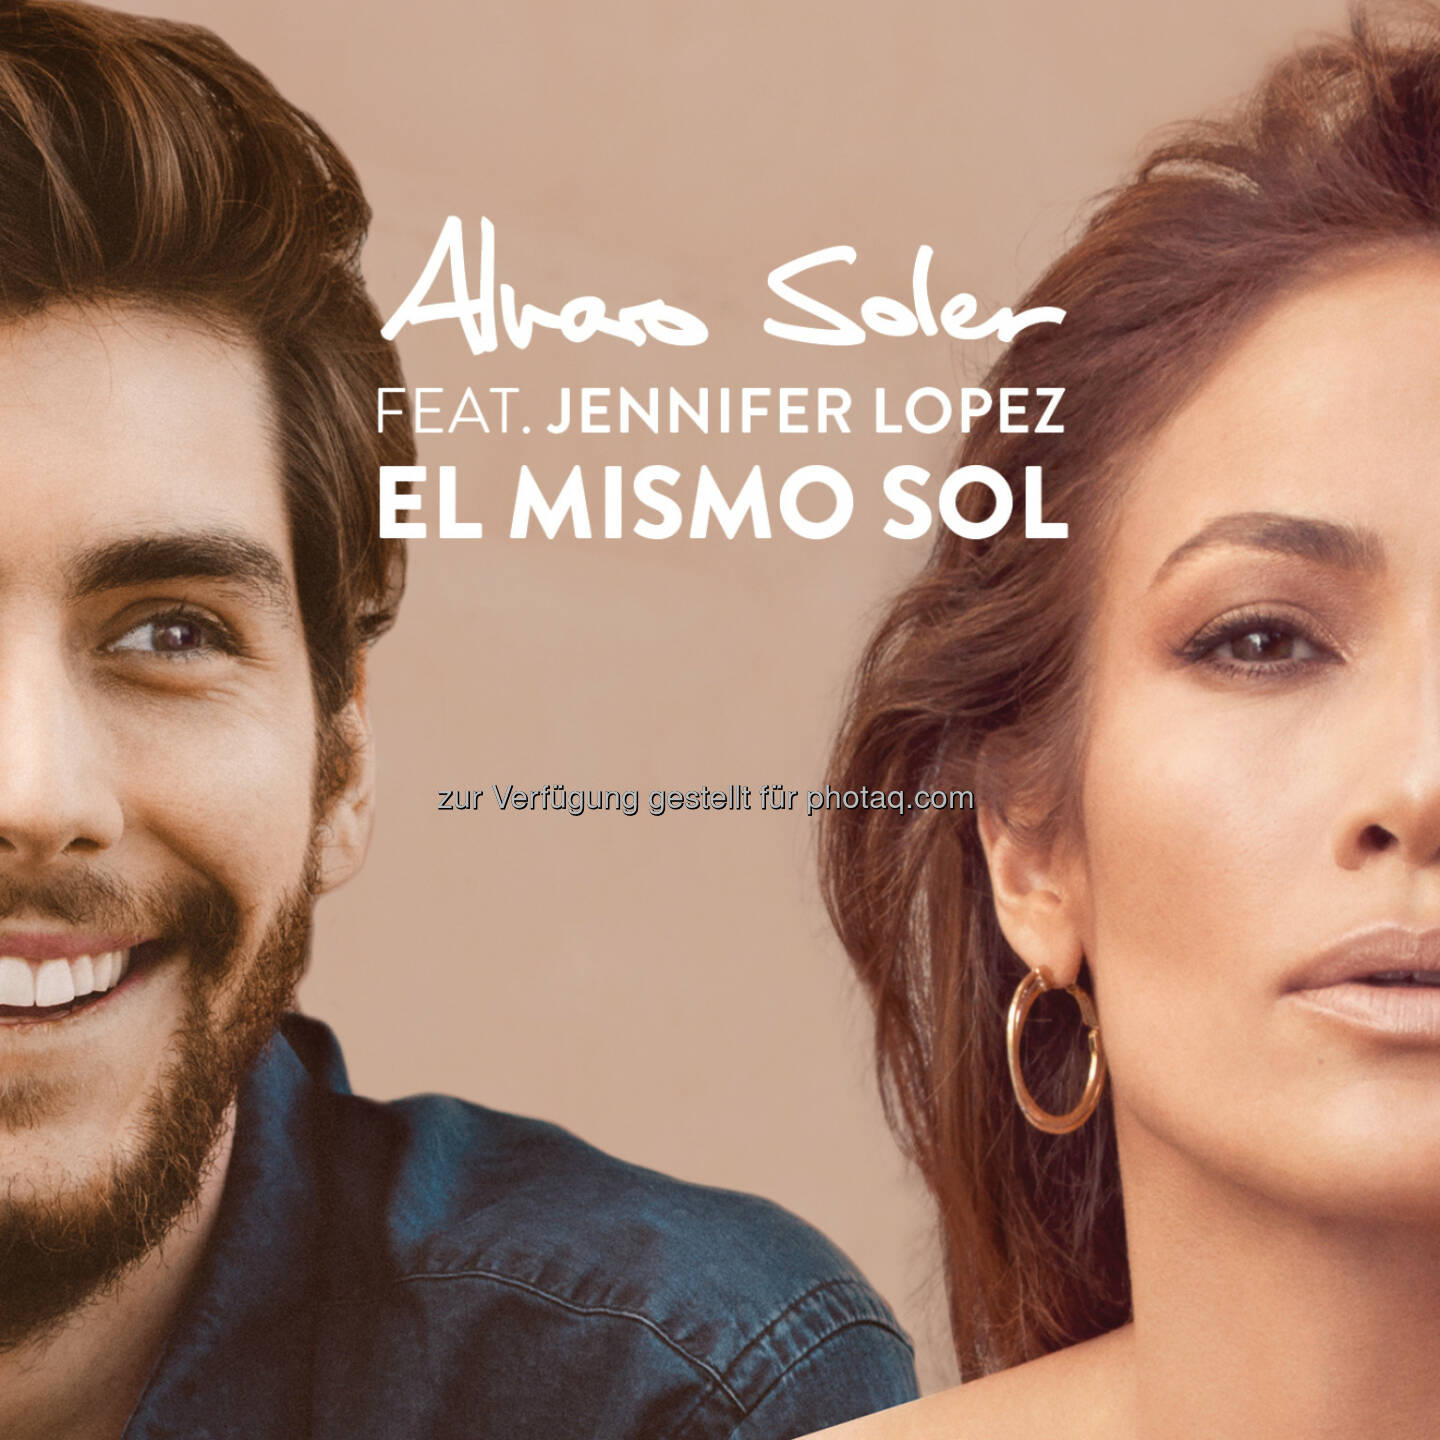 Alvaro Soler feat. Jennifer Lopez: Worldstar Upgrade für Hitsingle El Mismo Sol (C) Universal Music Entertainment GmbH